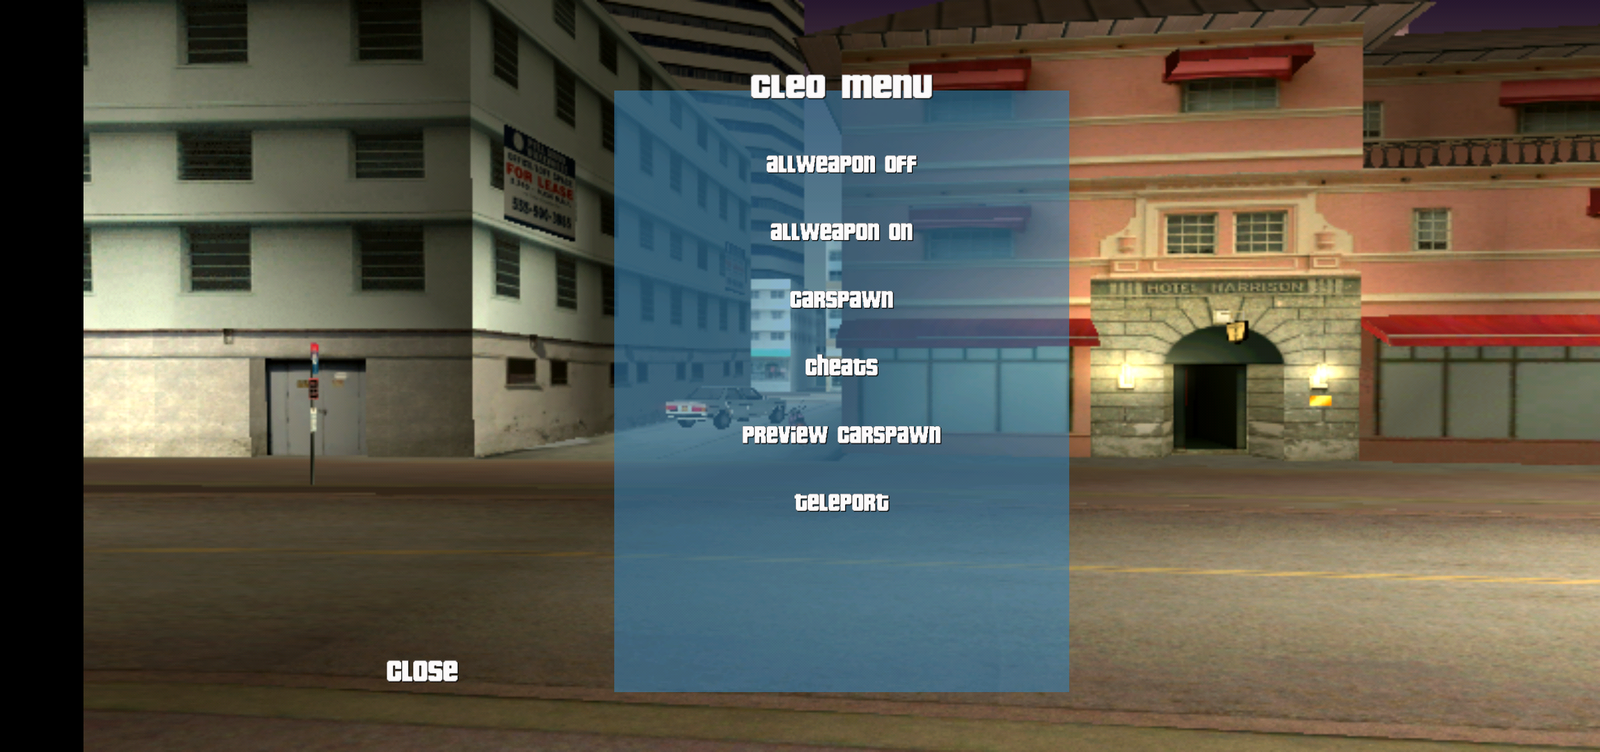 Grand Theft Auto Vice City Ver. 1.0.9 MOD APK, Cleo Mod Menu